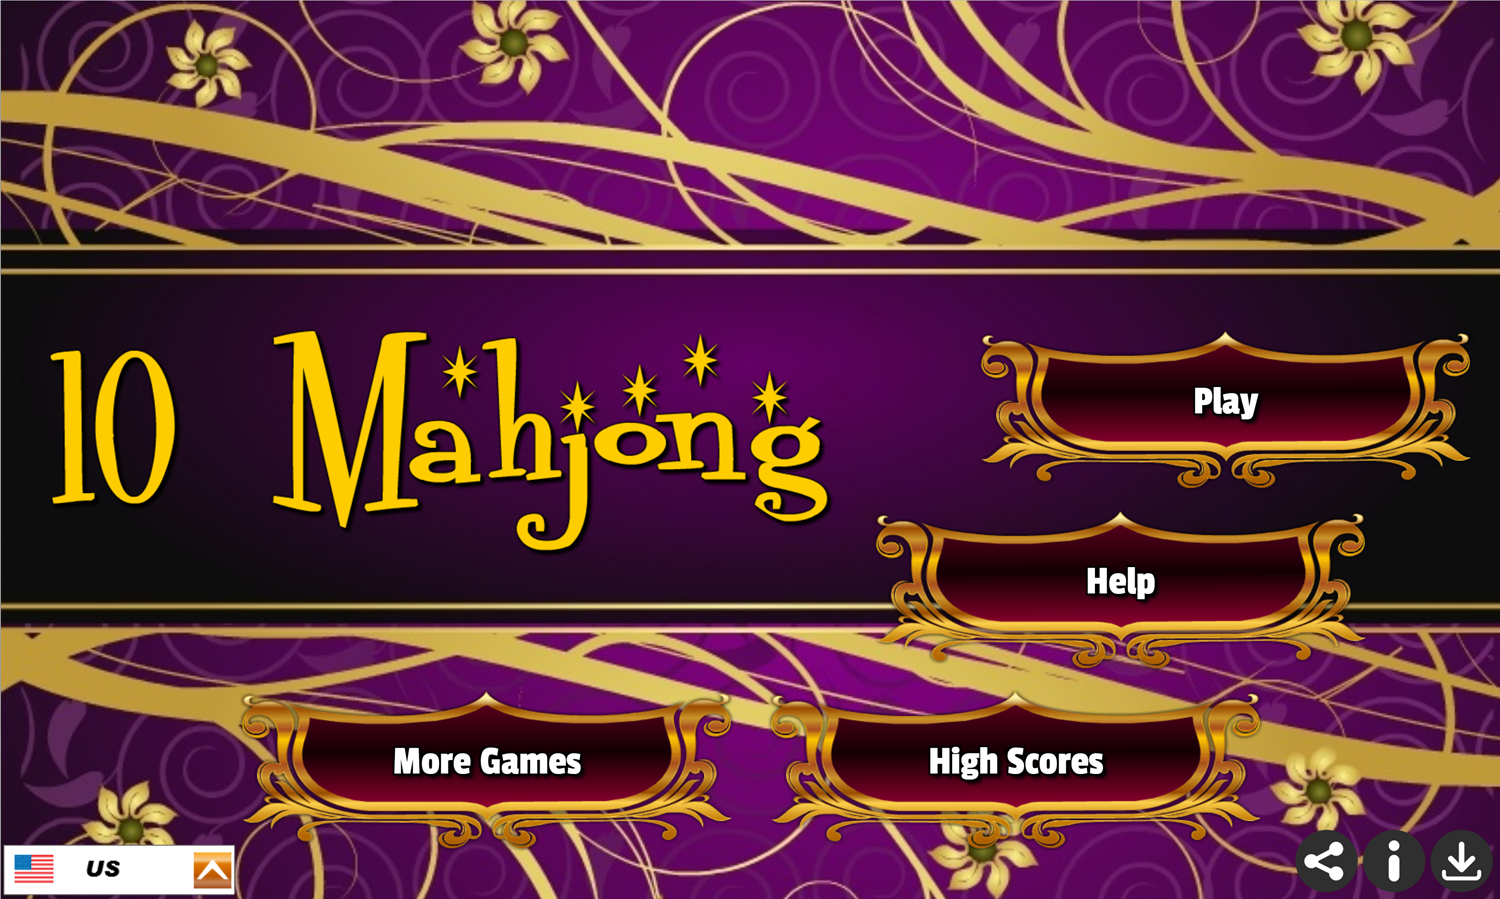 10 Mahjong Game Welcome Screen Screenshot.